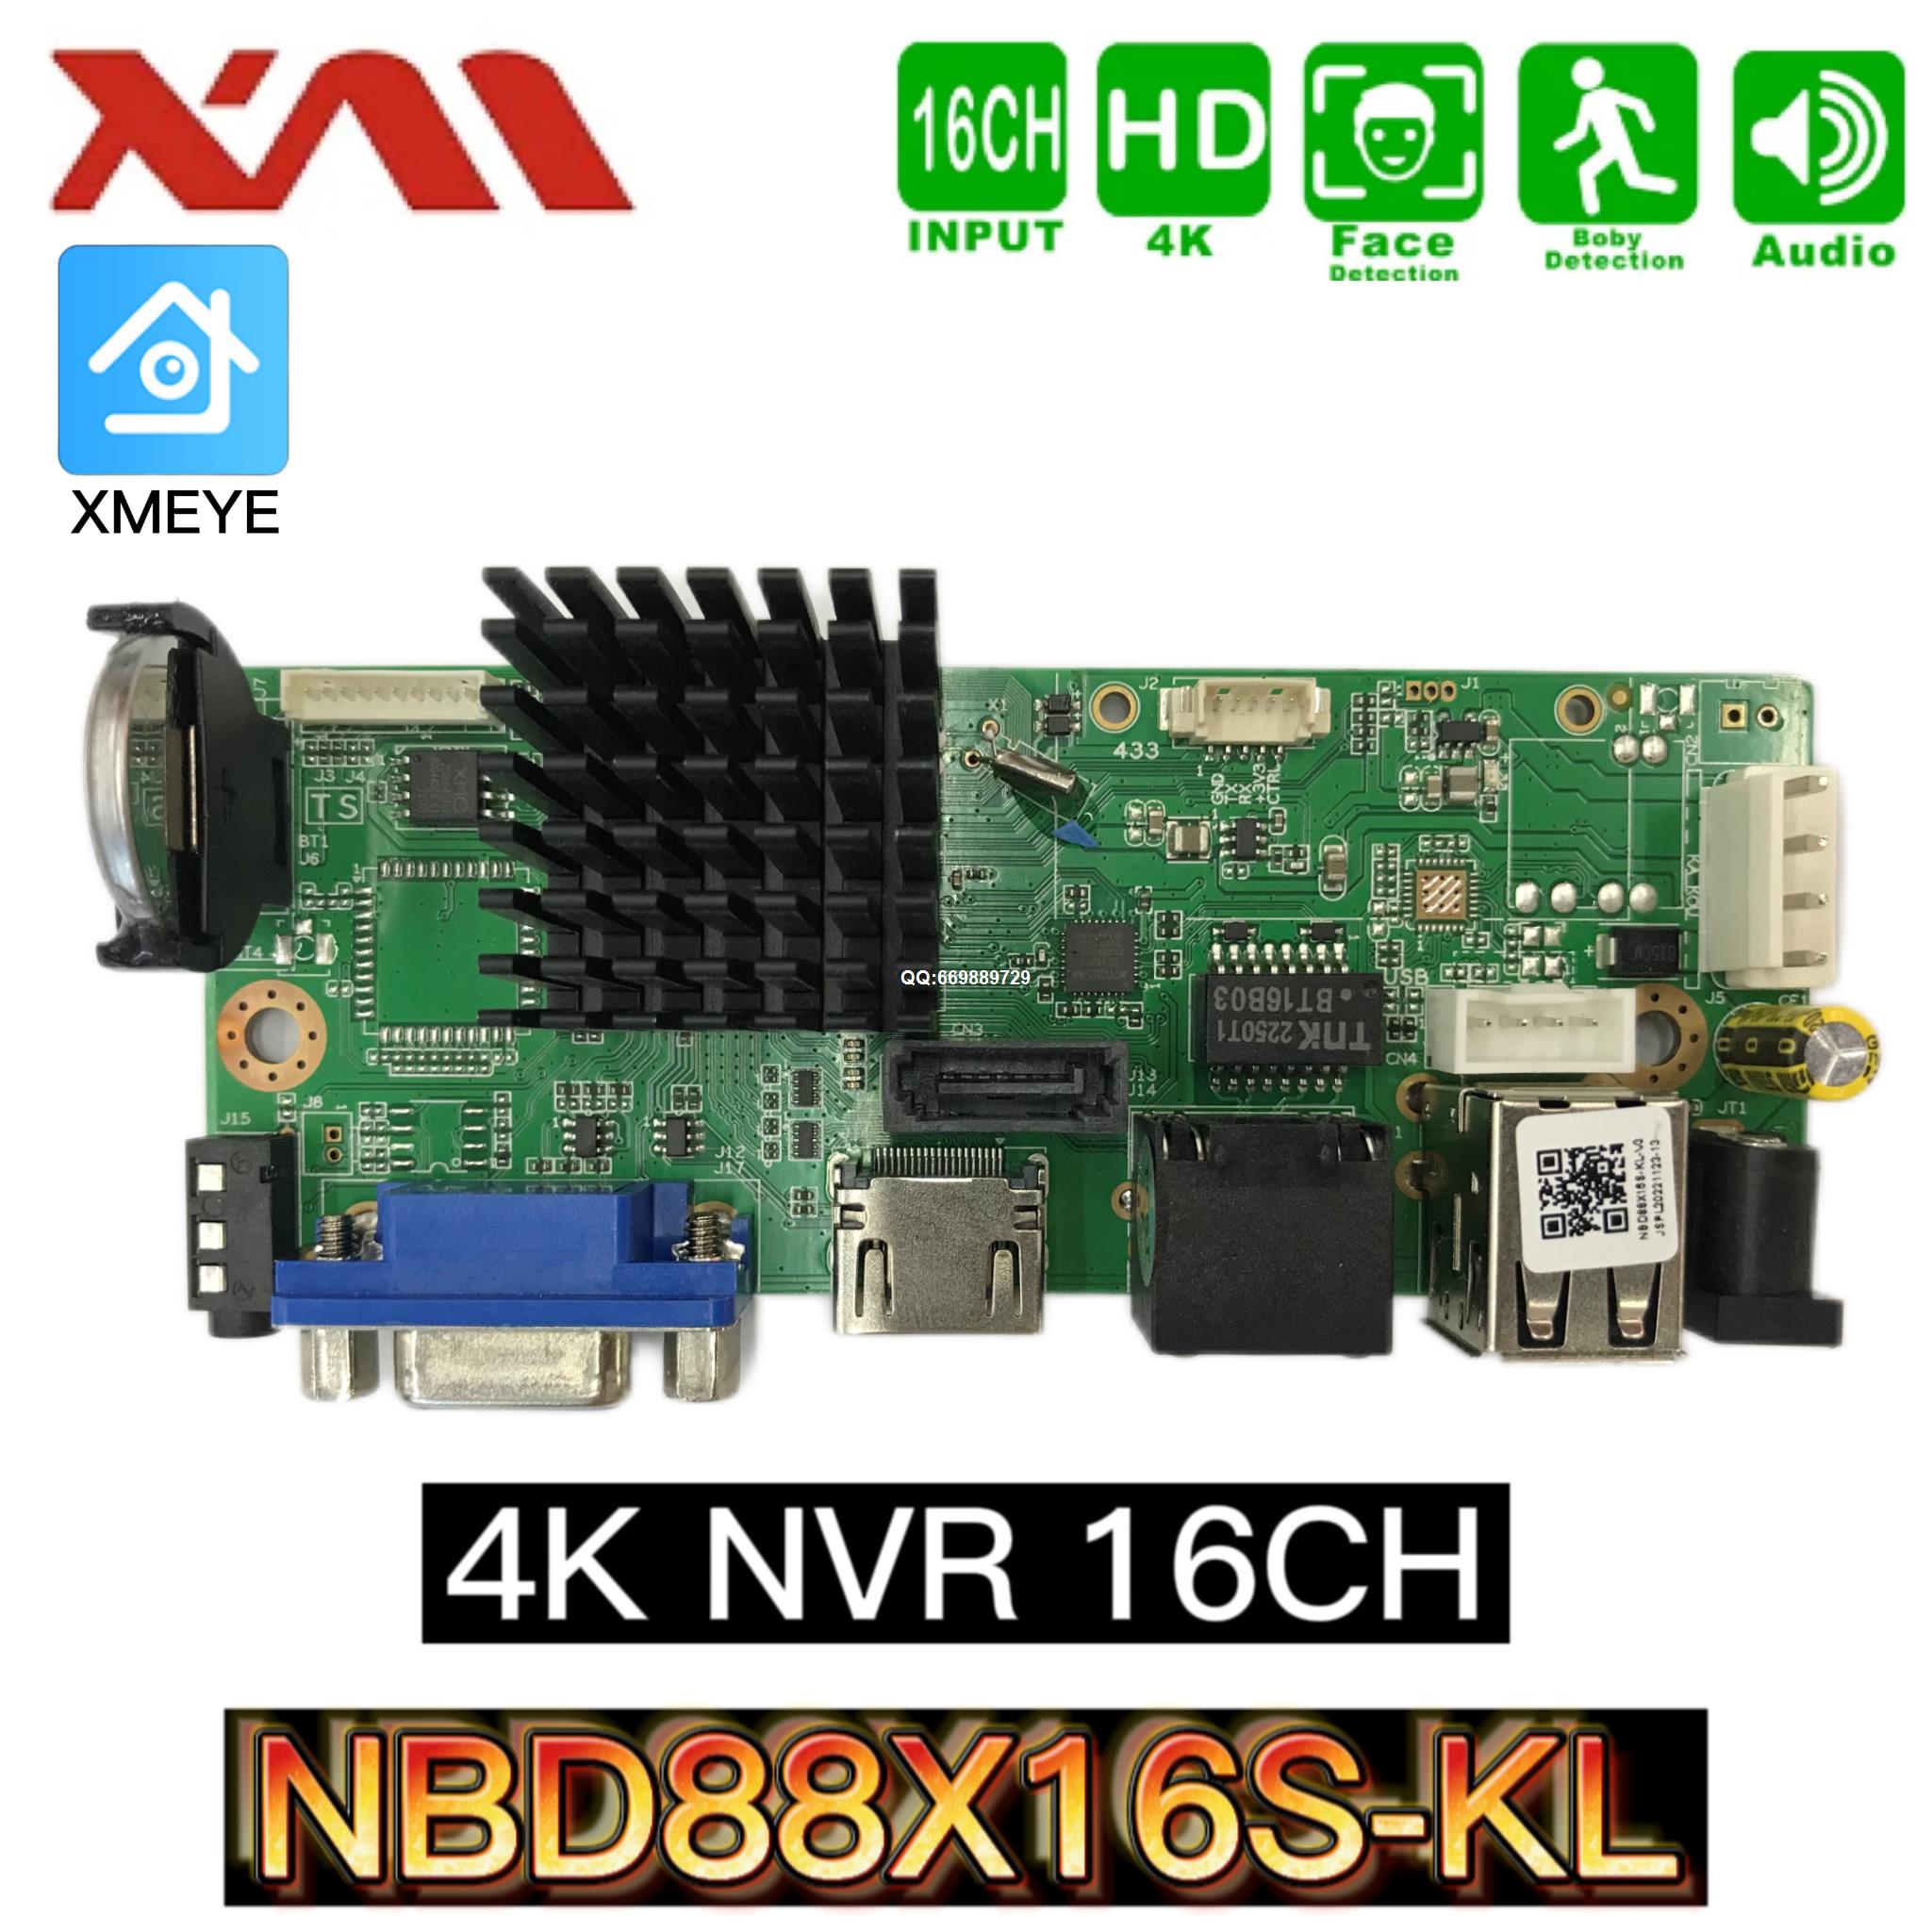 16CH NBD-88X16S-KL NVR主板-深圳市雅视嘉科技有限公司